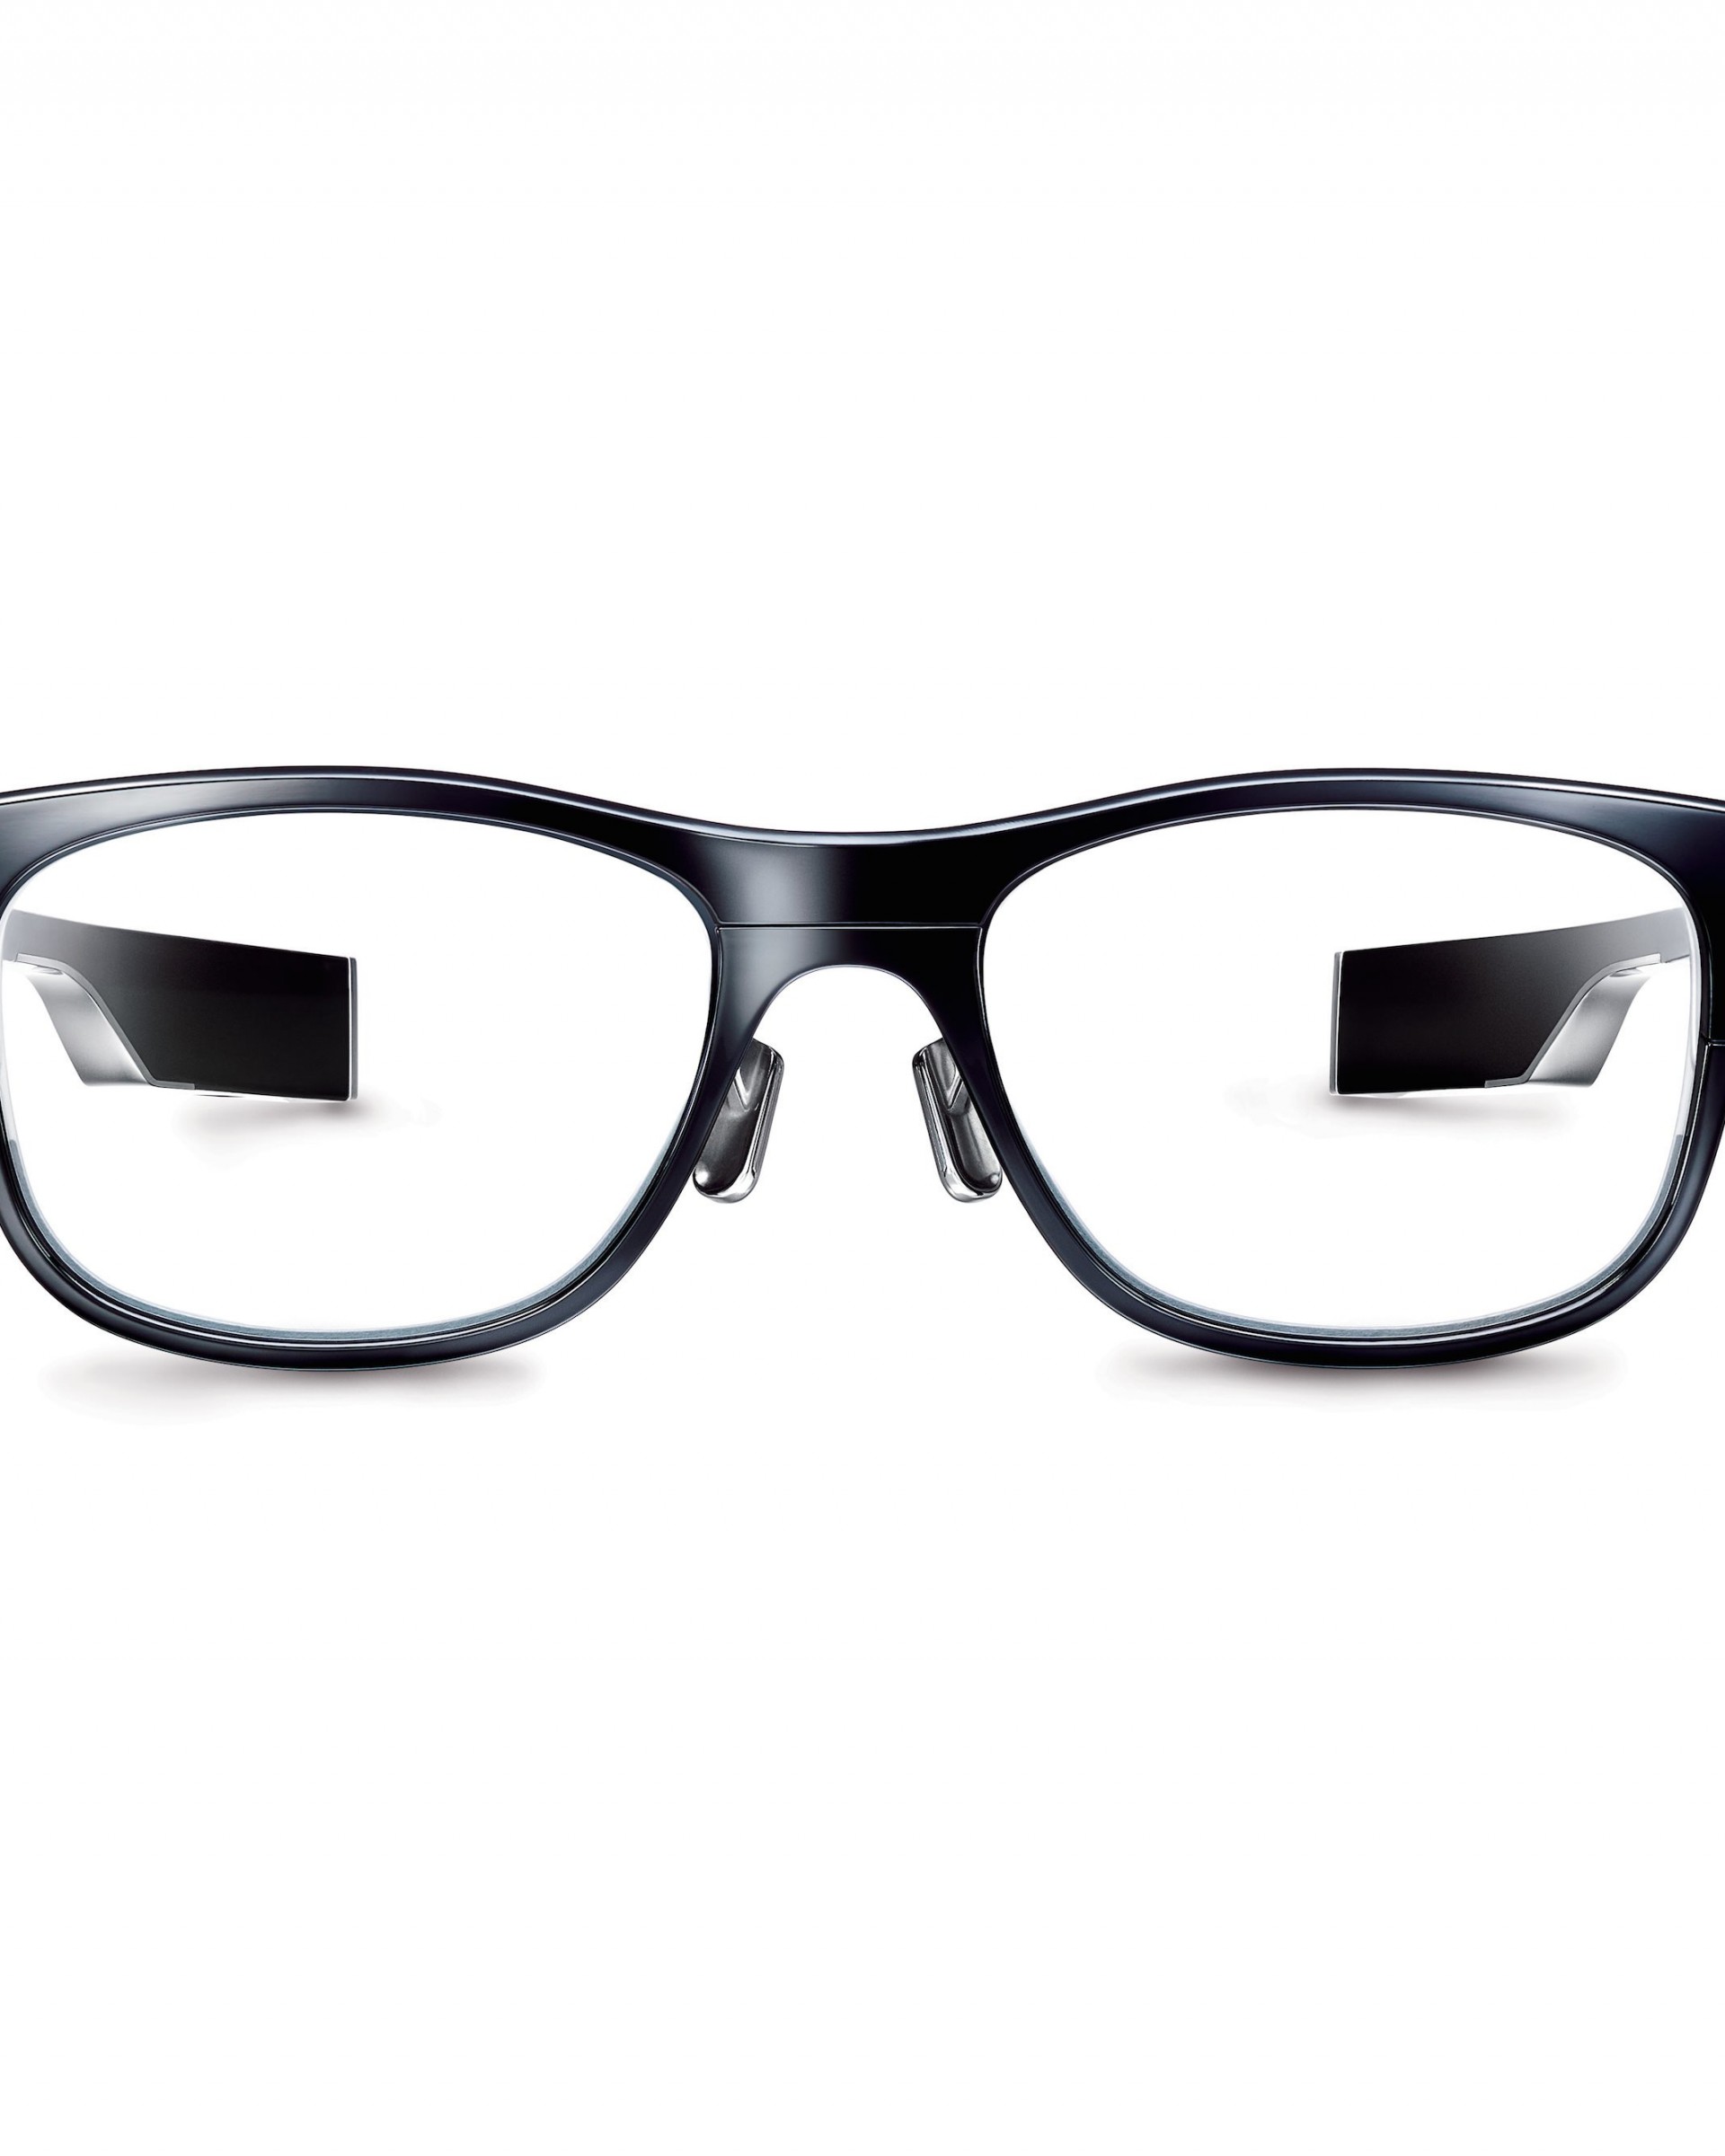 Jins Meme Smart Glasses Wallpaper for Google Nexus 7